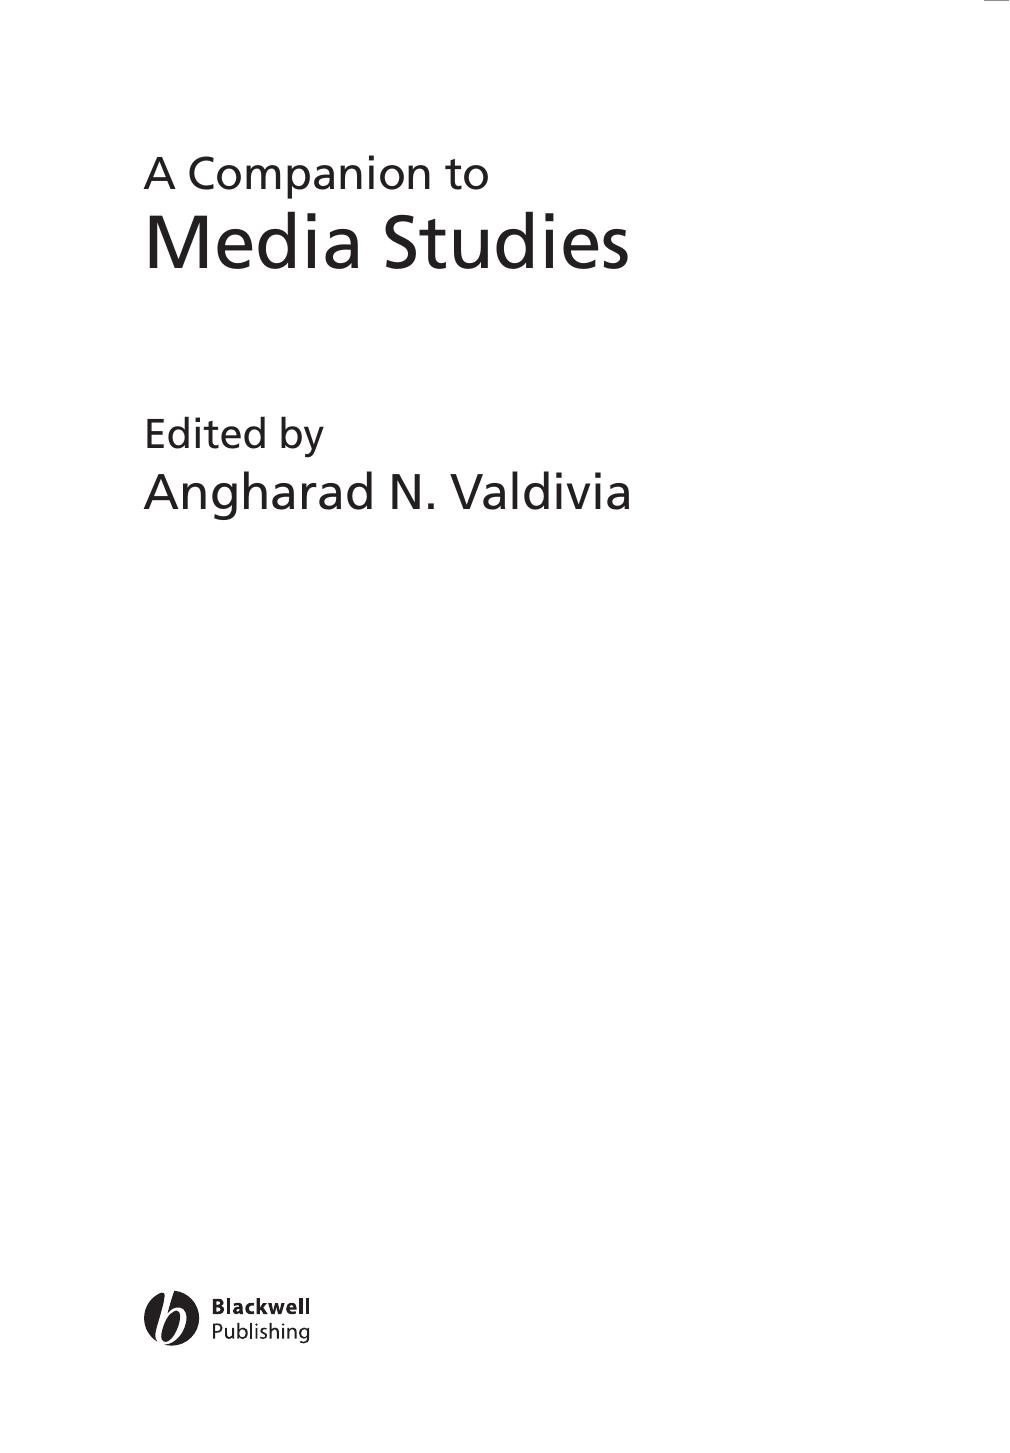 [Angharad Valdivia] A Companion to Media Studies 2003